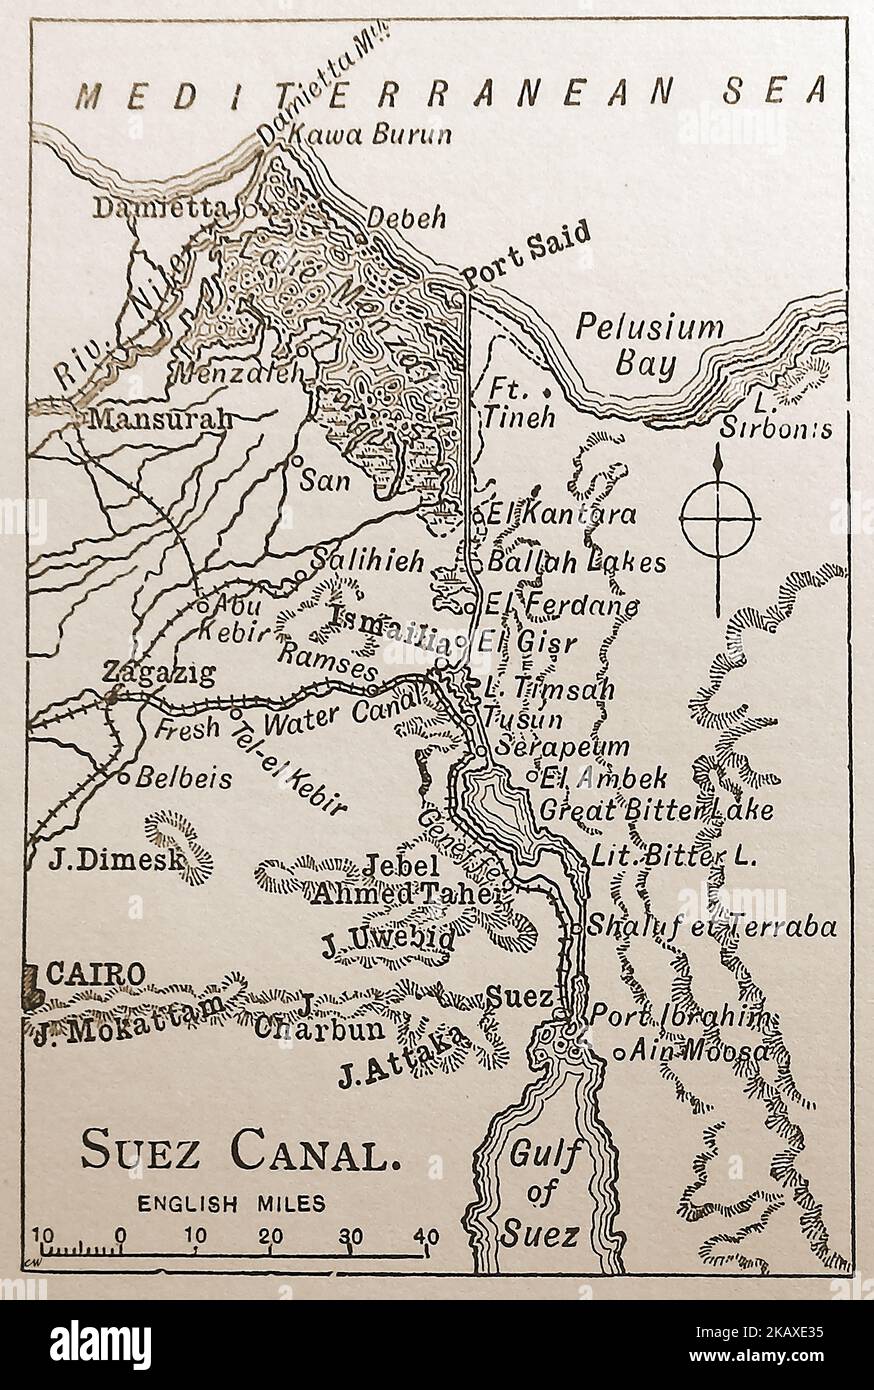 A late 19thcentury map of the Suez Canal region.  ----    خريطة أواخر القرن 19 لمنطقة قناة السويس.  ----   Une carte de la fin du 19ème siècle de la région du canal de Suez.  ---  Um mapa do final do século XIX da região do Canal do Suez. Stock Photo